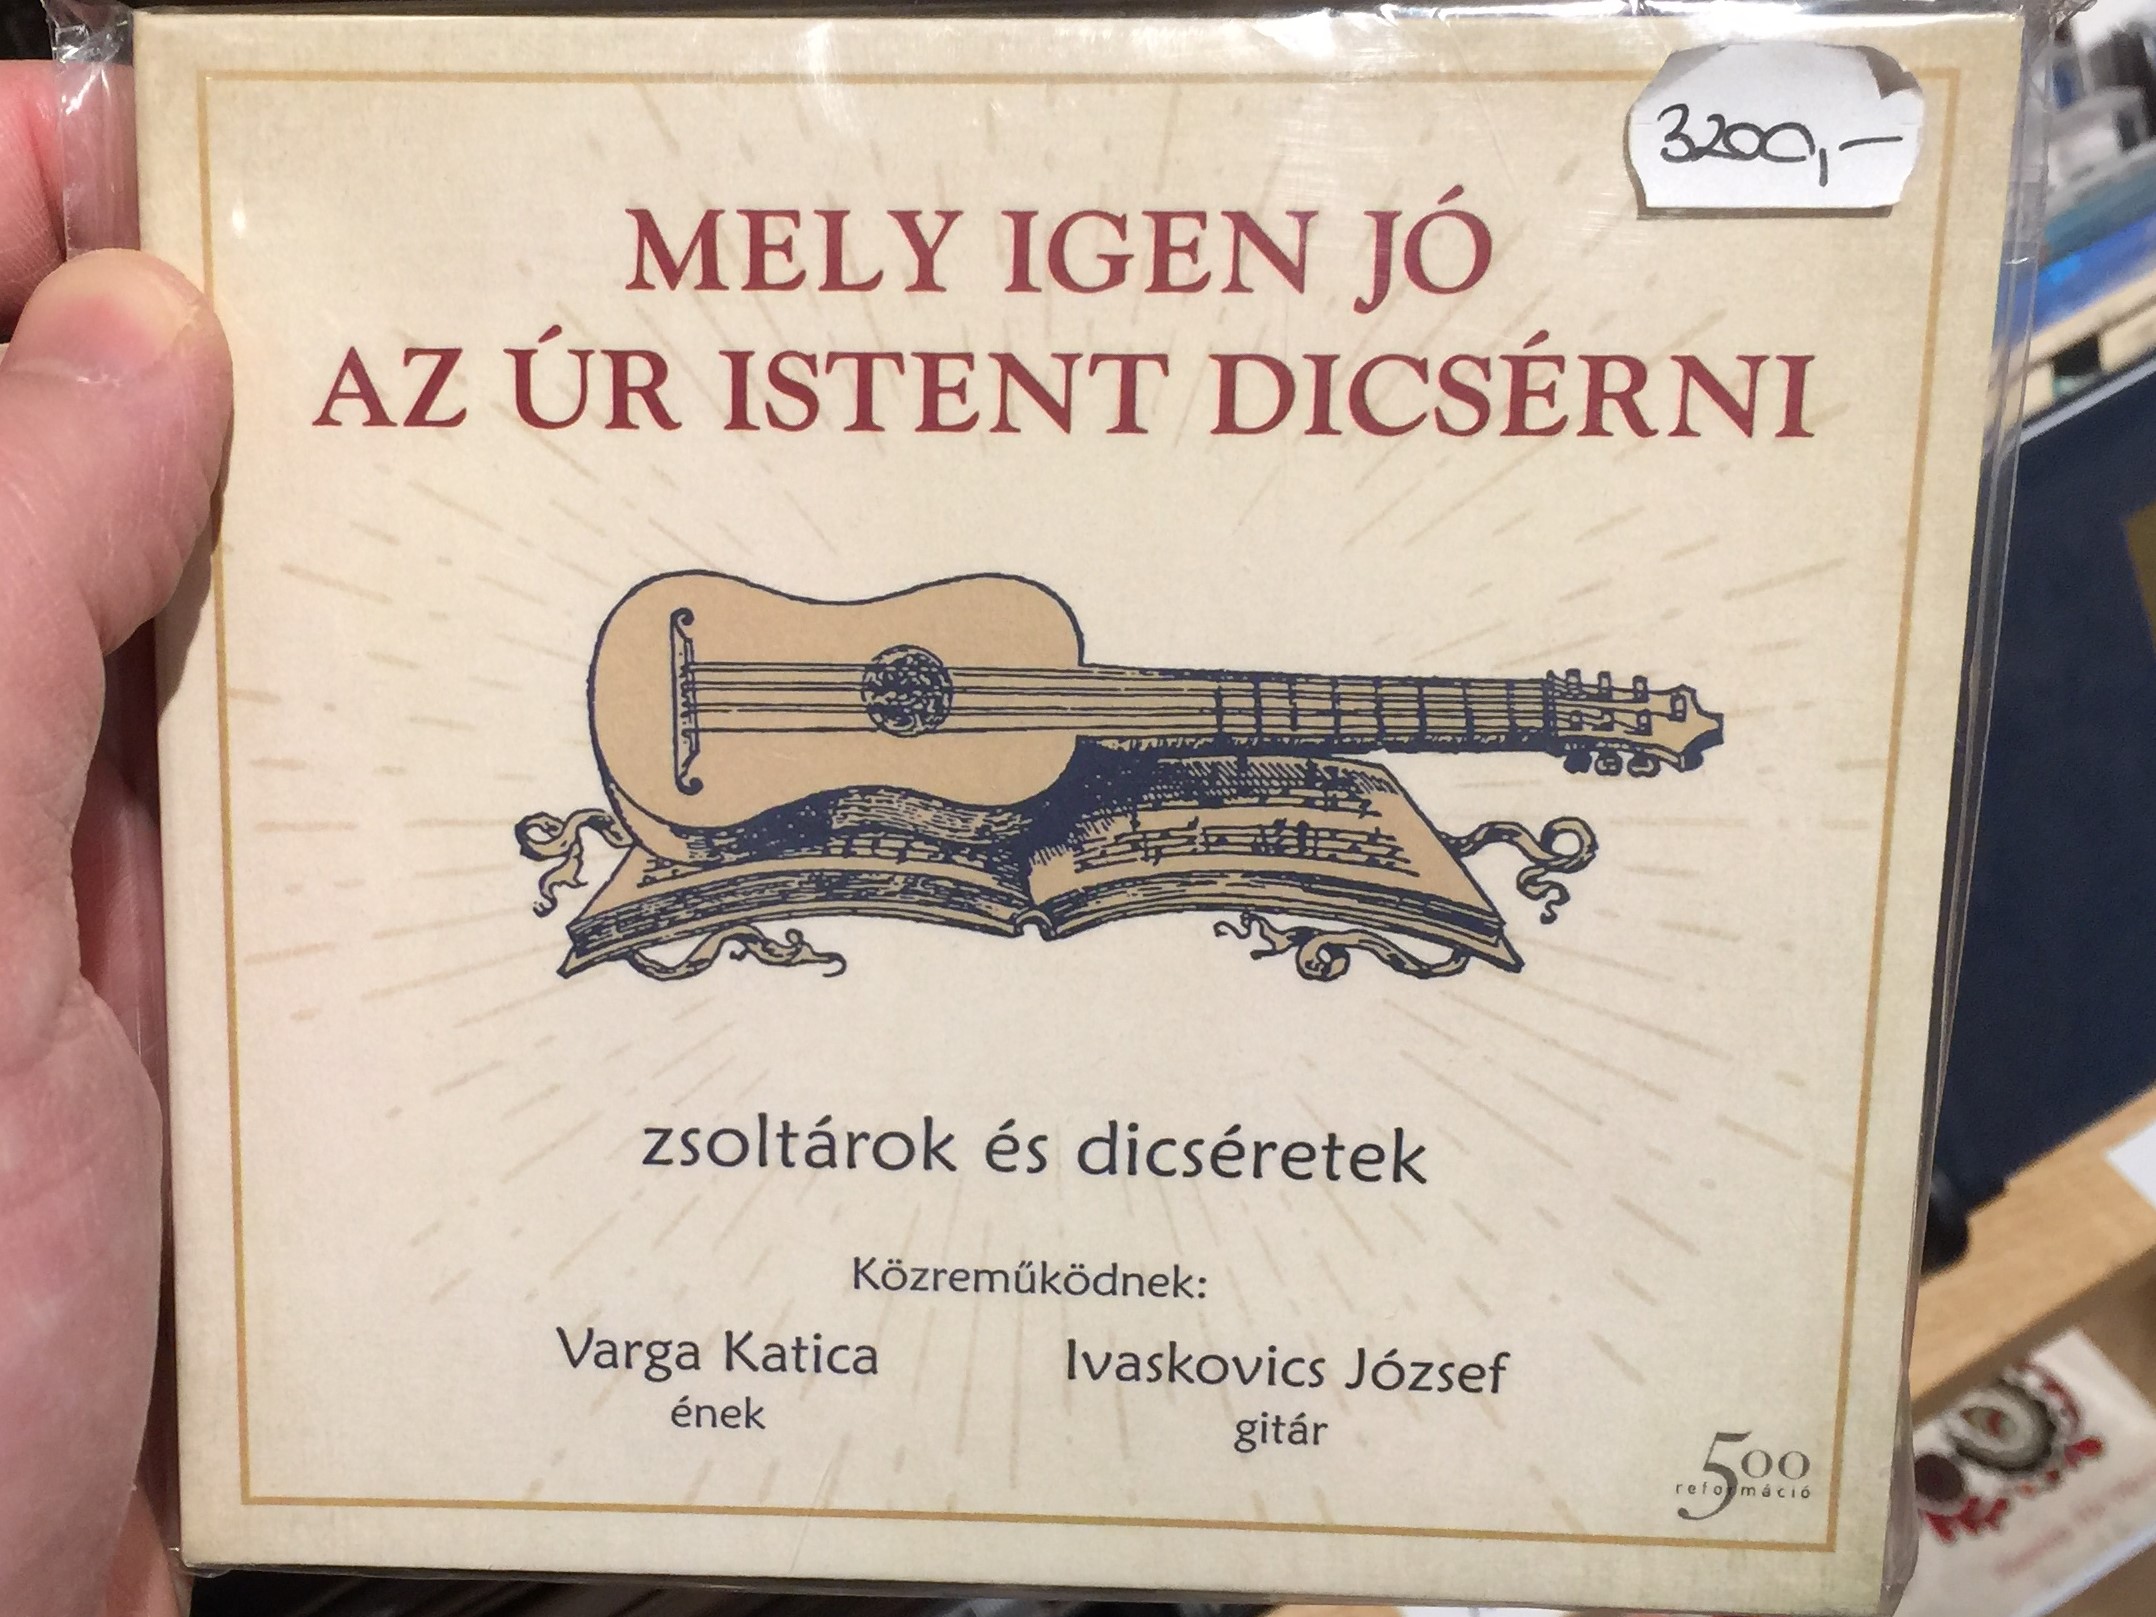 mely-igen-jo-az-ur-istent-dicserni-zsoltarok-es-disceretek-kozremukodnek-varga-katica-enek-ivaskovics-jozsef-gitar-audio-cd-2017-2990-ft-1-.jpg